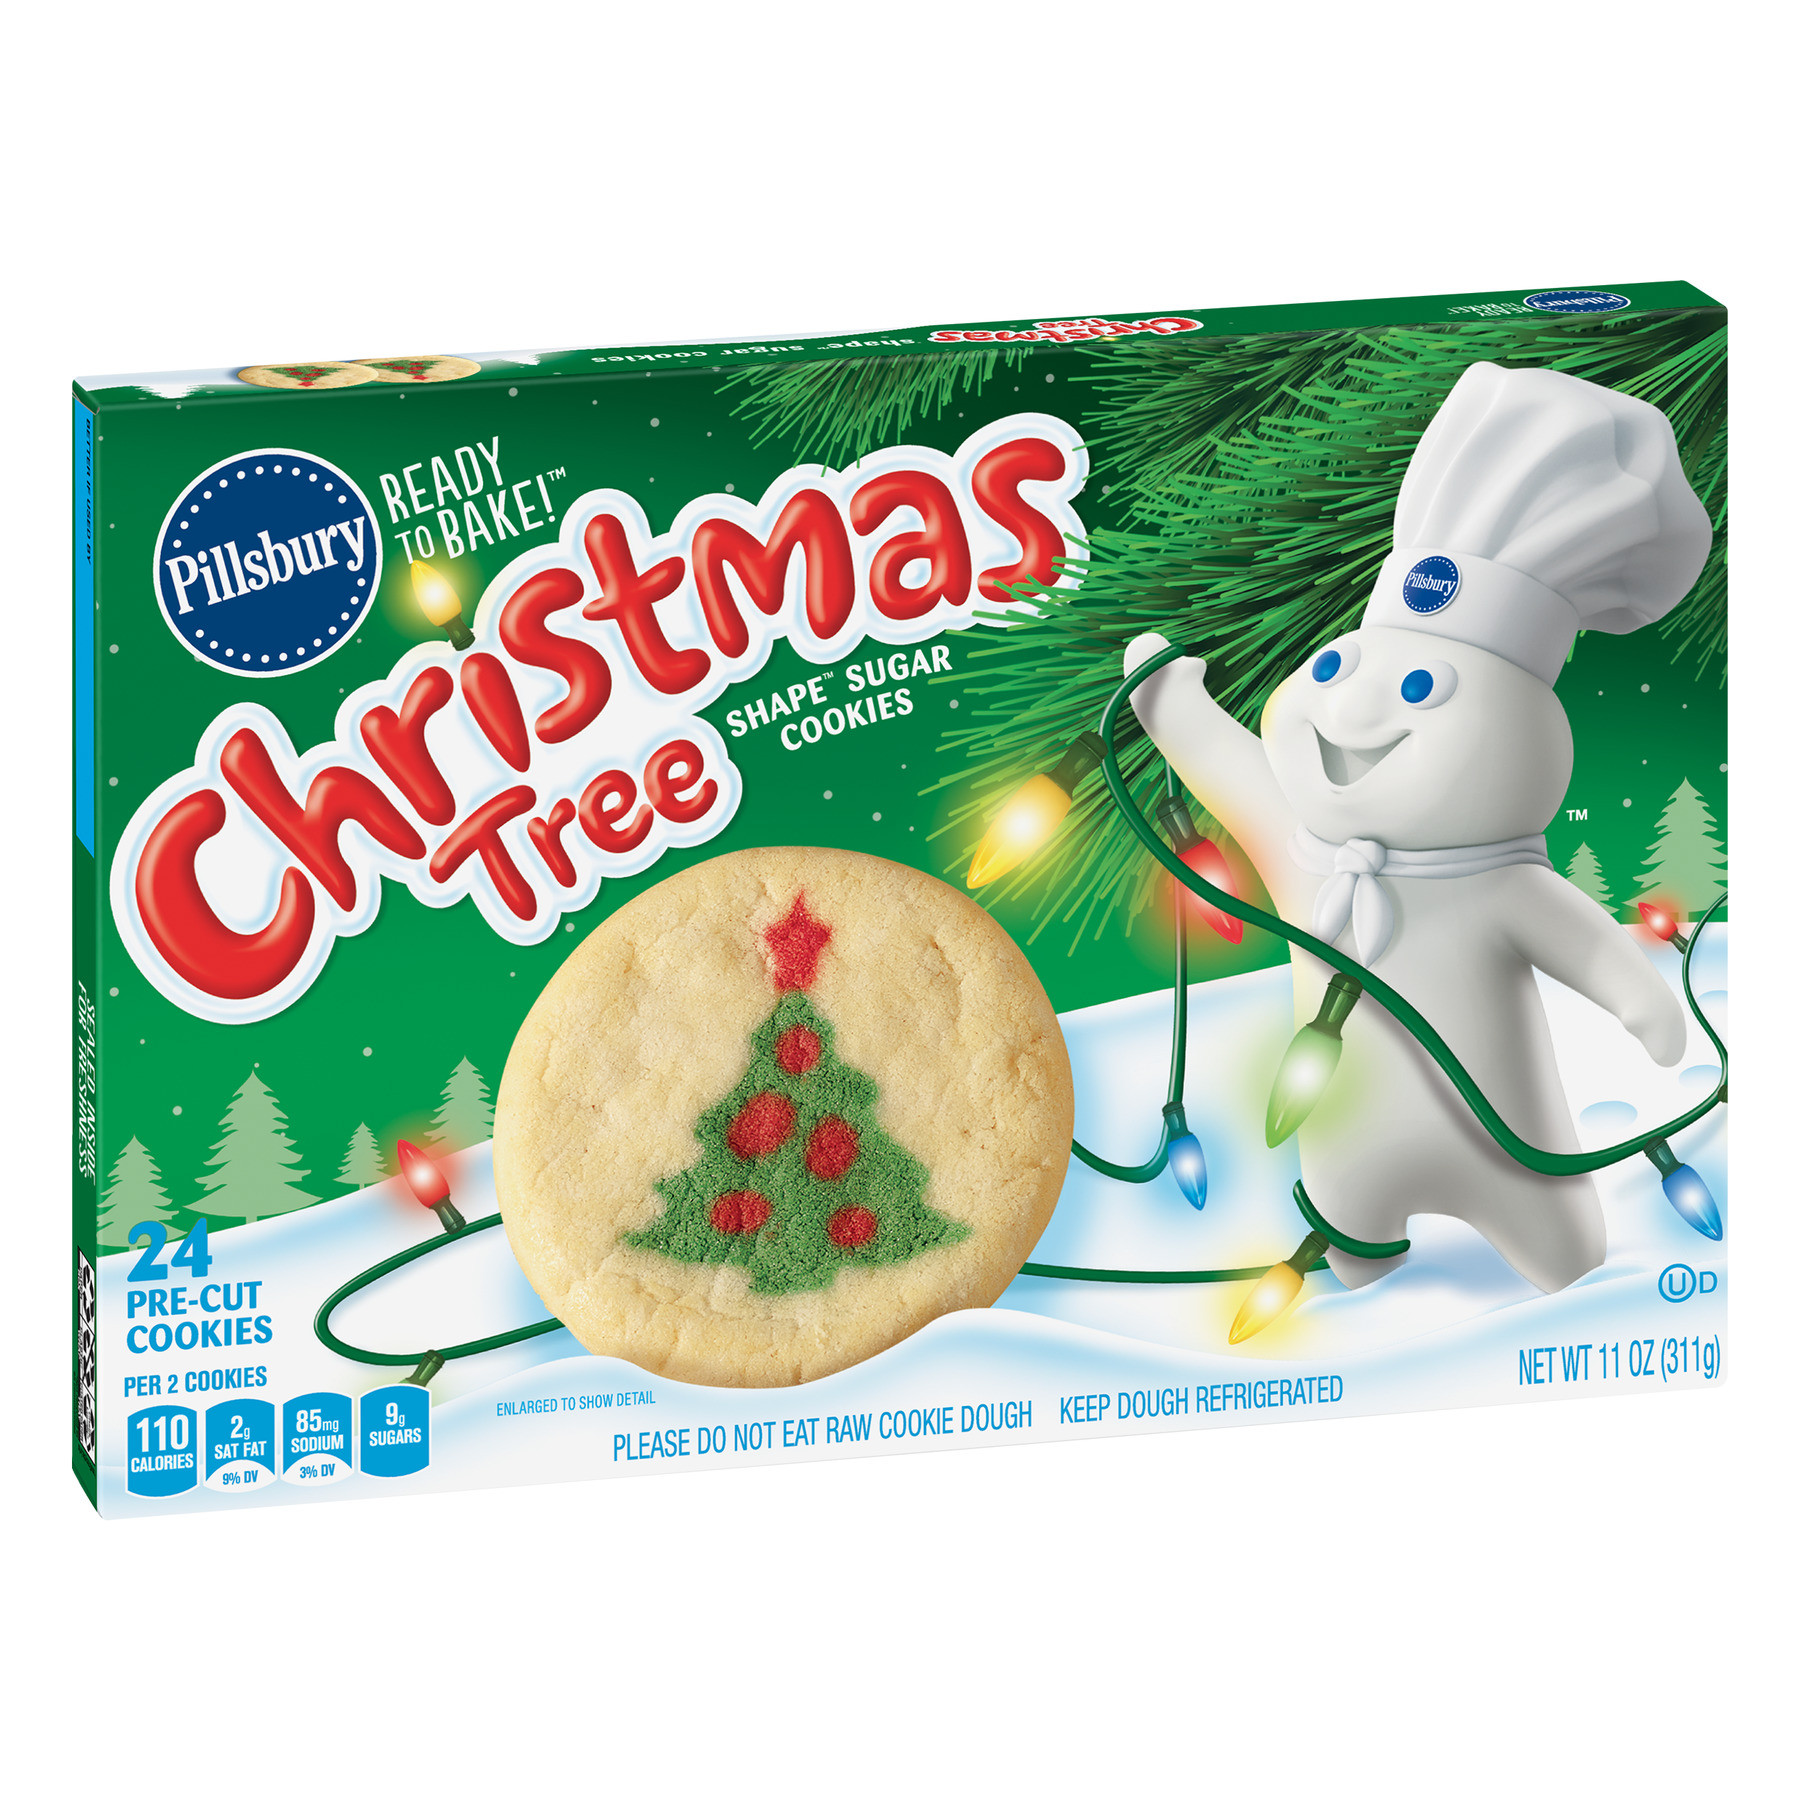 Christmas Sugar Cookies Pillsbury
 Pillsbury Ready to Bake Christmas Tree Shape Sugar